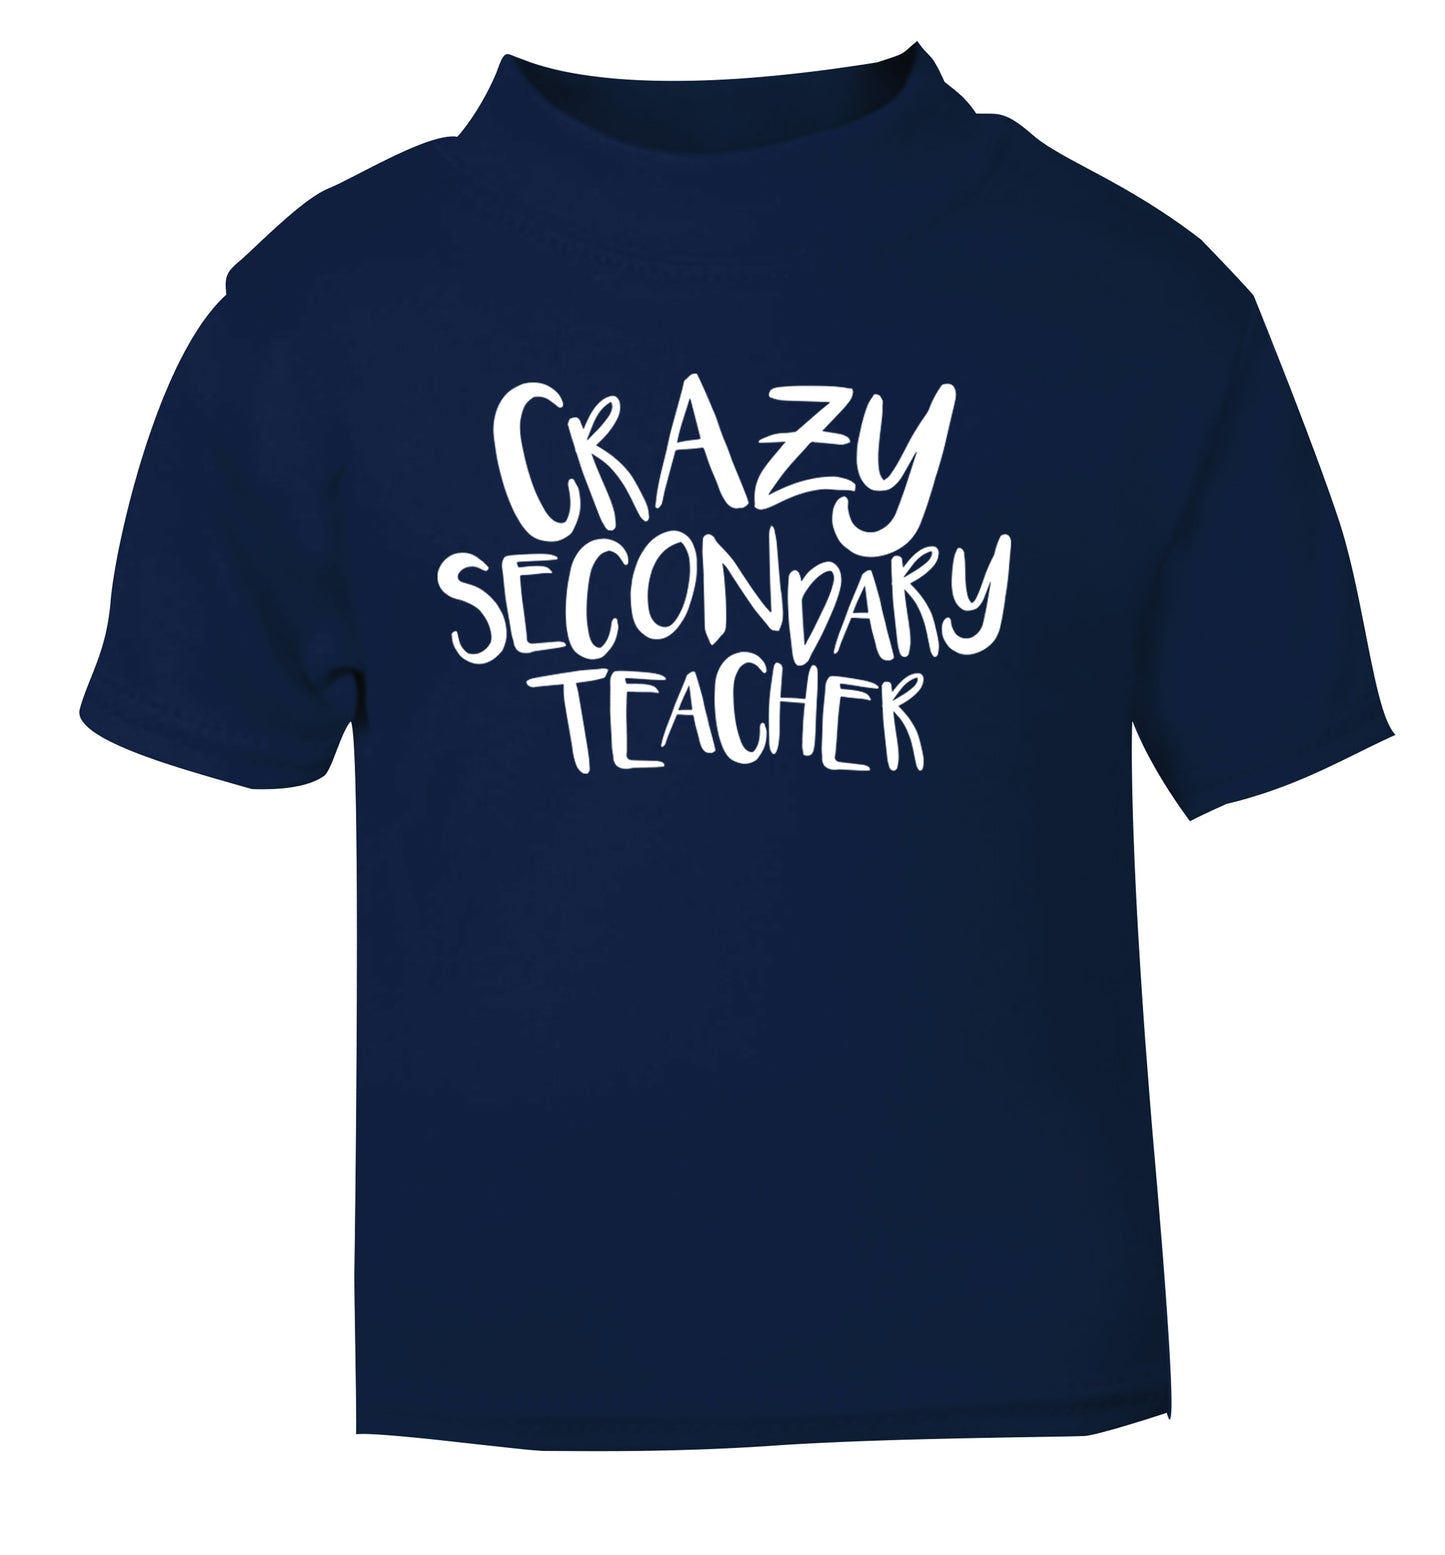 Crazy secondary teacher navy Baby Toddler Tshirt 2 Years